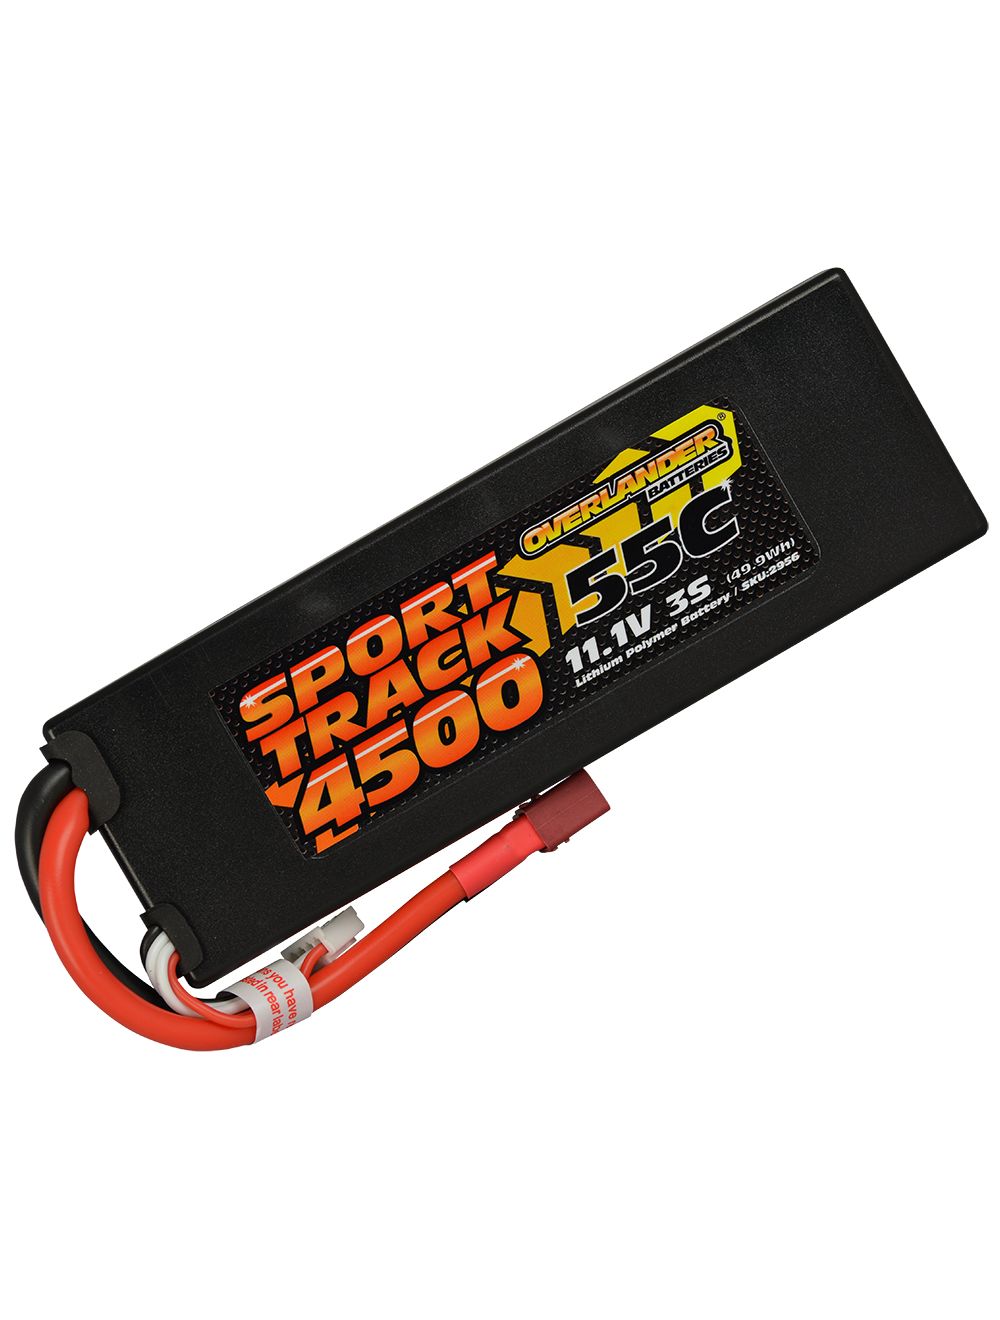 Overlander 4500mAh 11.1V 3S 55C Hard Case Sport Track LiPo Battery - Traxxas Connector 2956